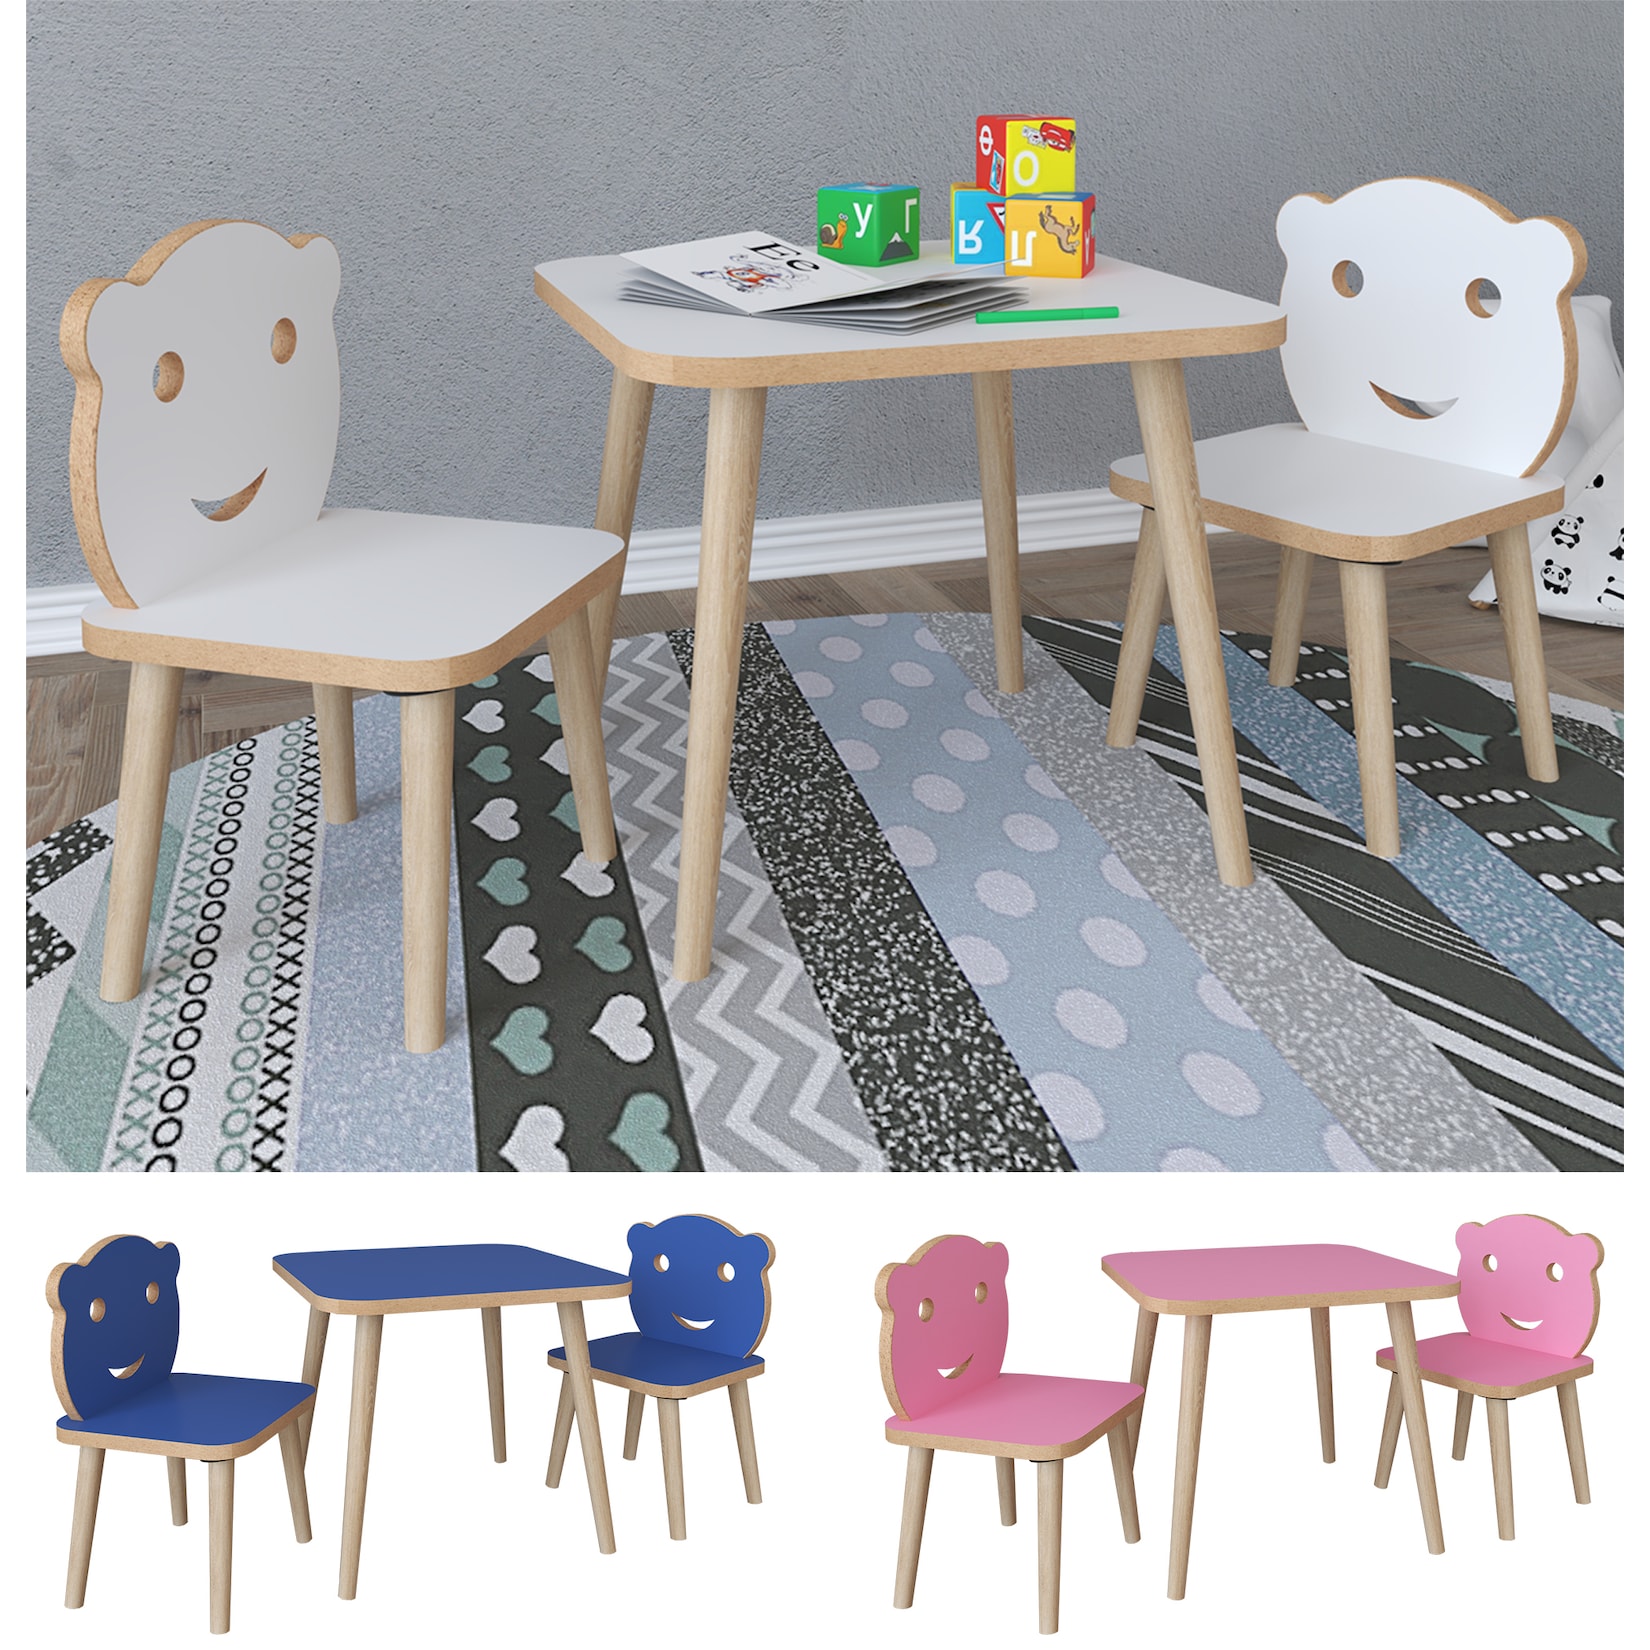 Hioshop LiLuLa babykamer tafel en stoelen blauw.